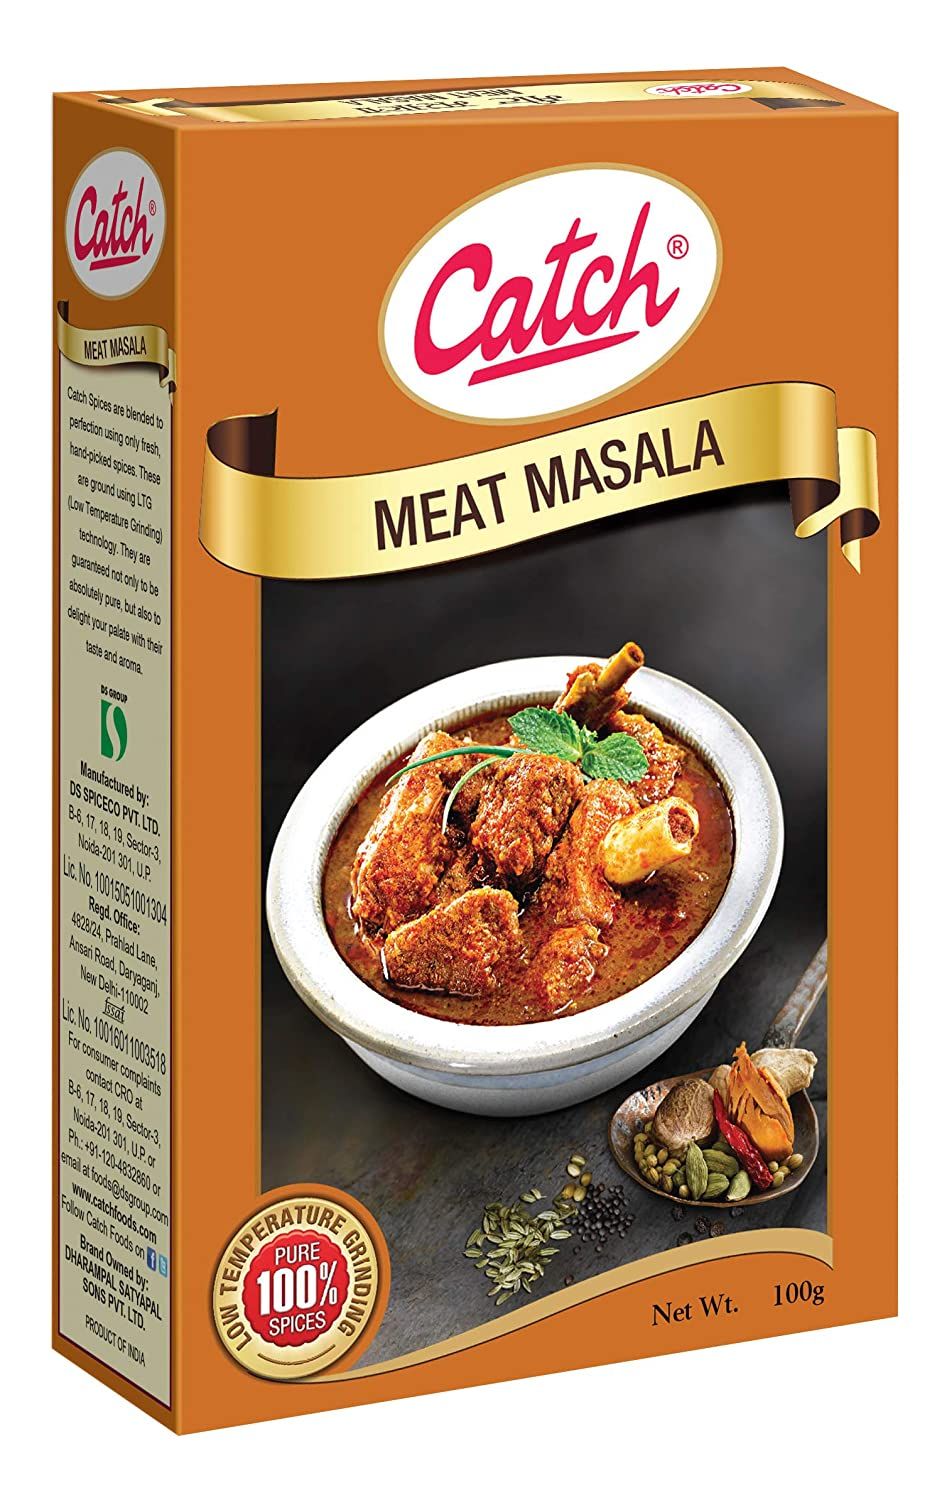 Catch Meat Masala Image